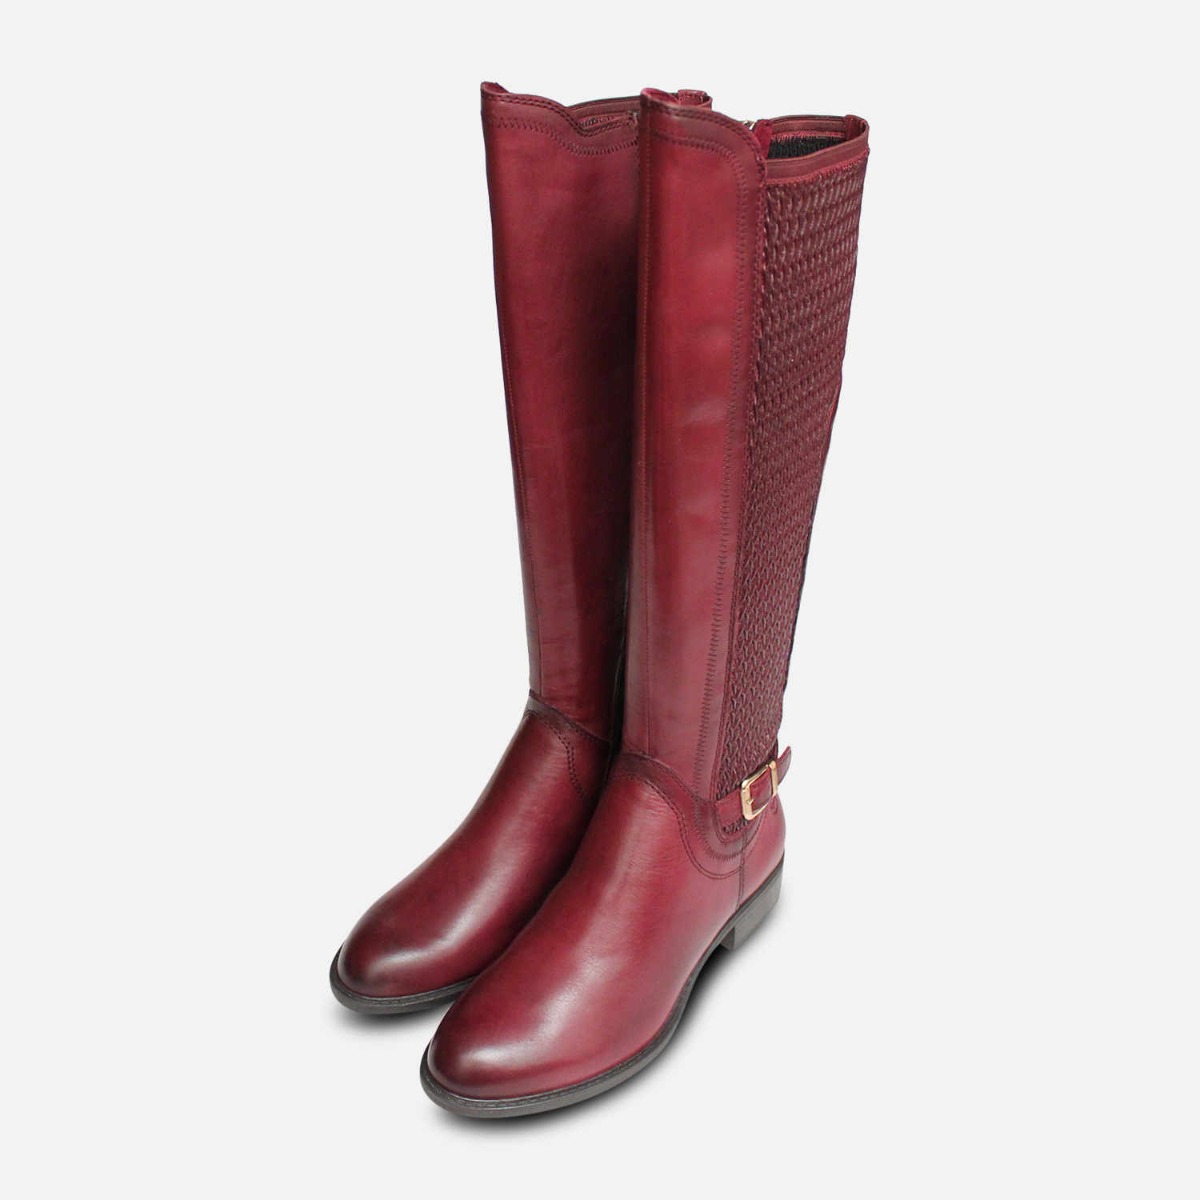 burgundy high boots